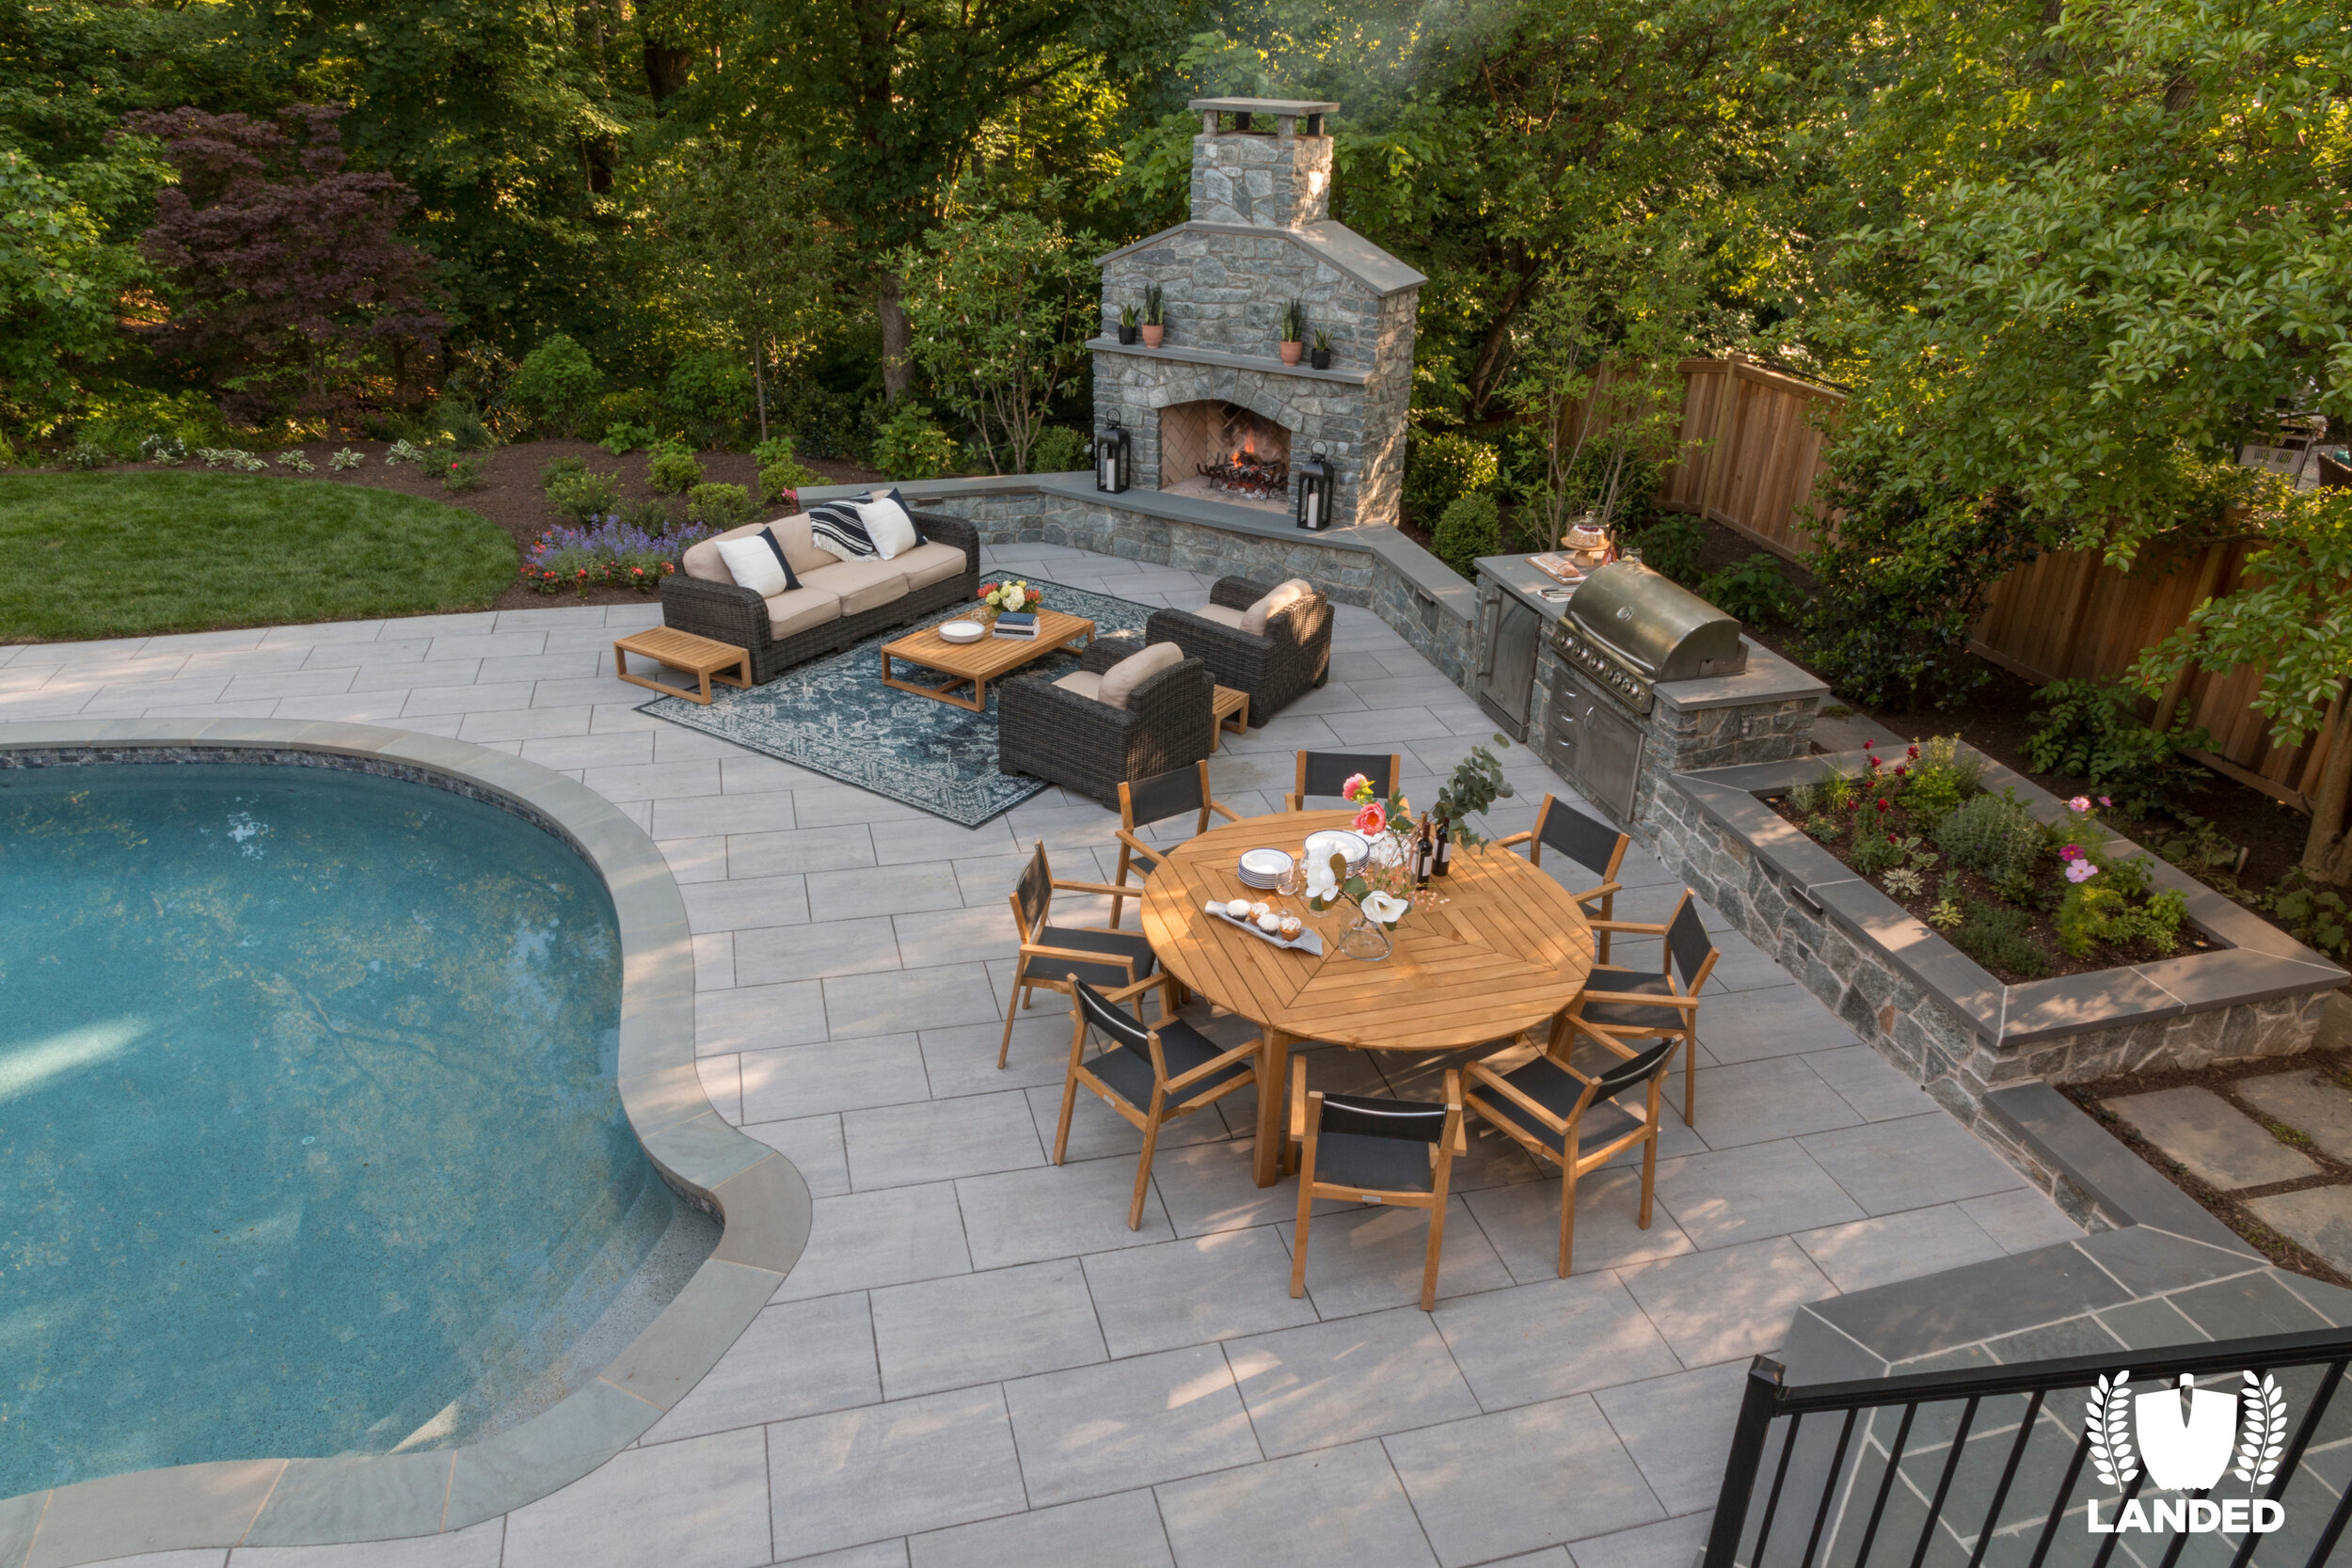  outdoor fireplace, pool. backyard, outdoor living, outdoor kitchen, patio 